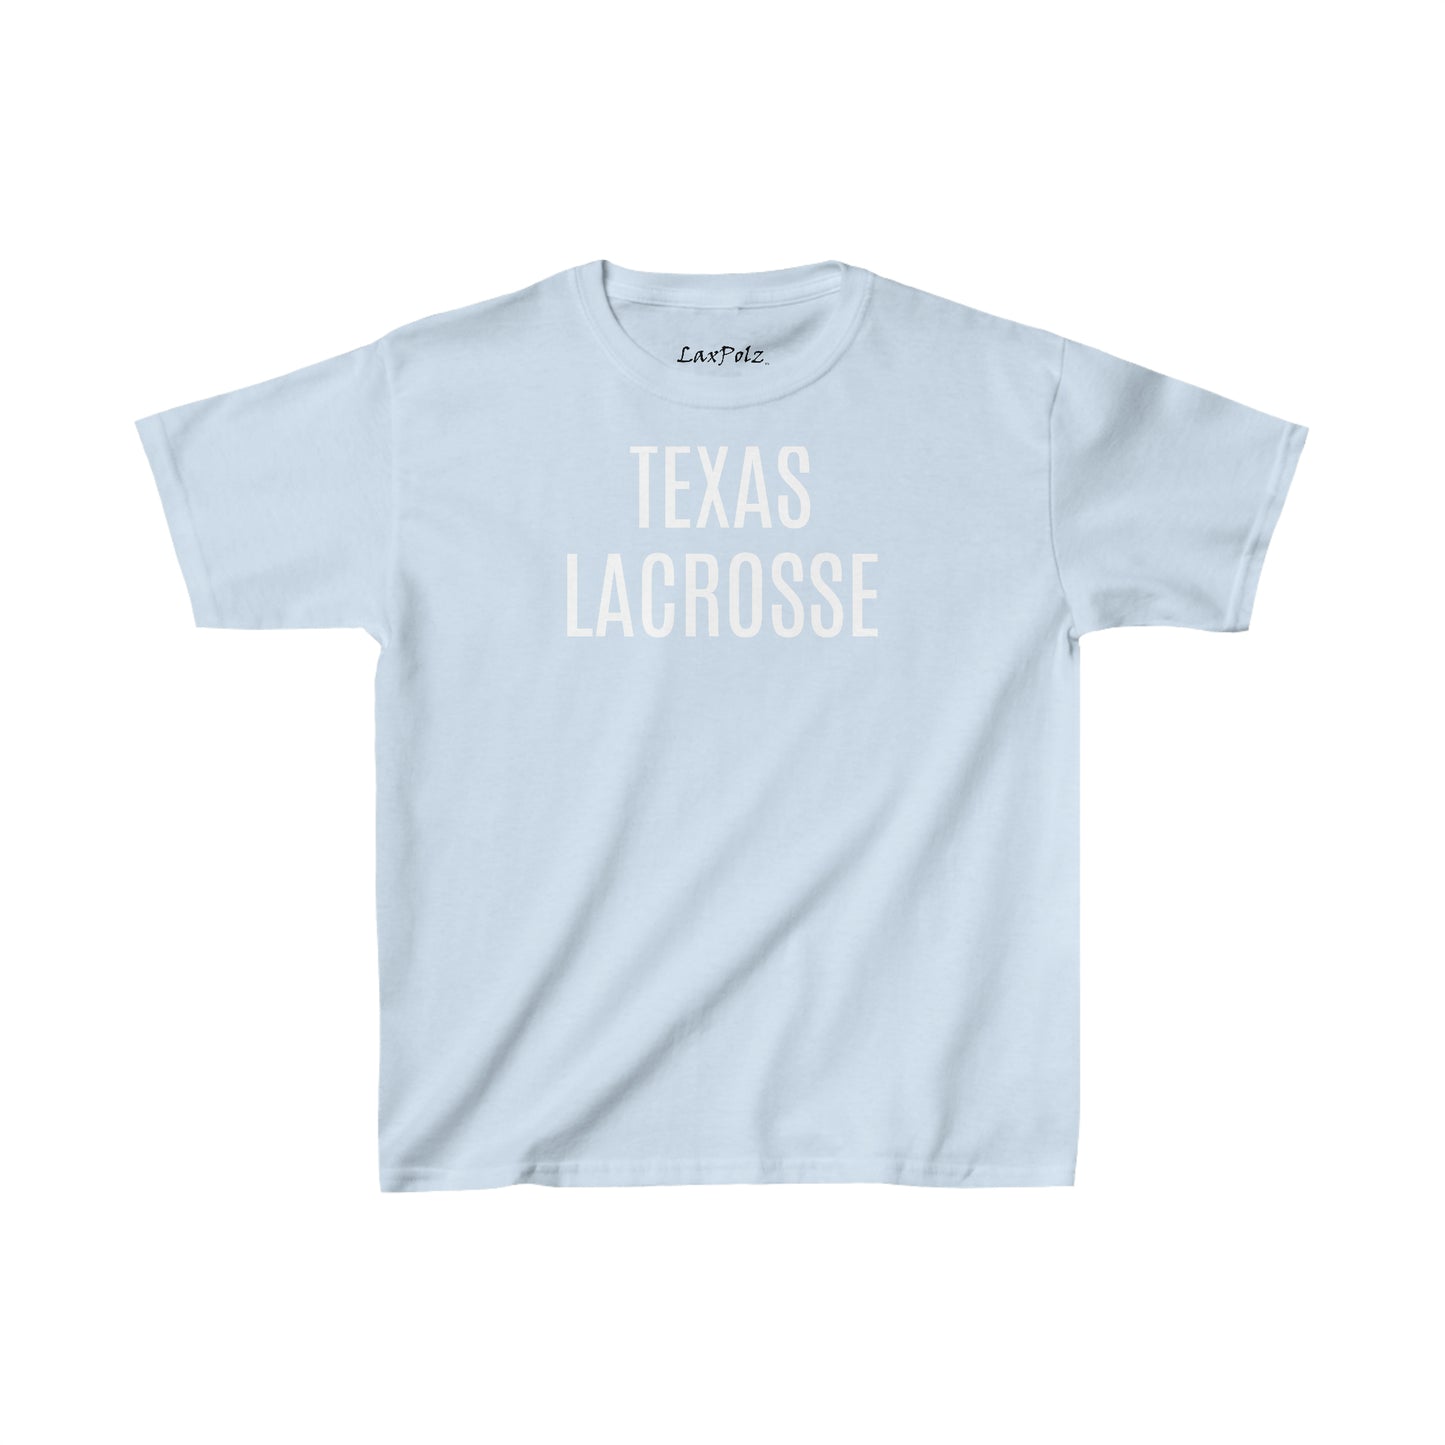 Texas Lacrosse Kids Cotton Tee